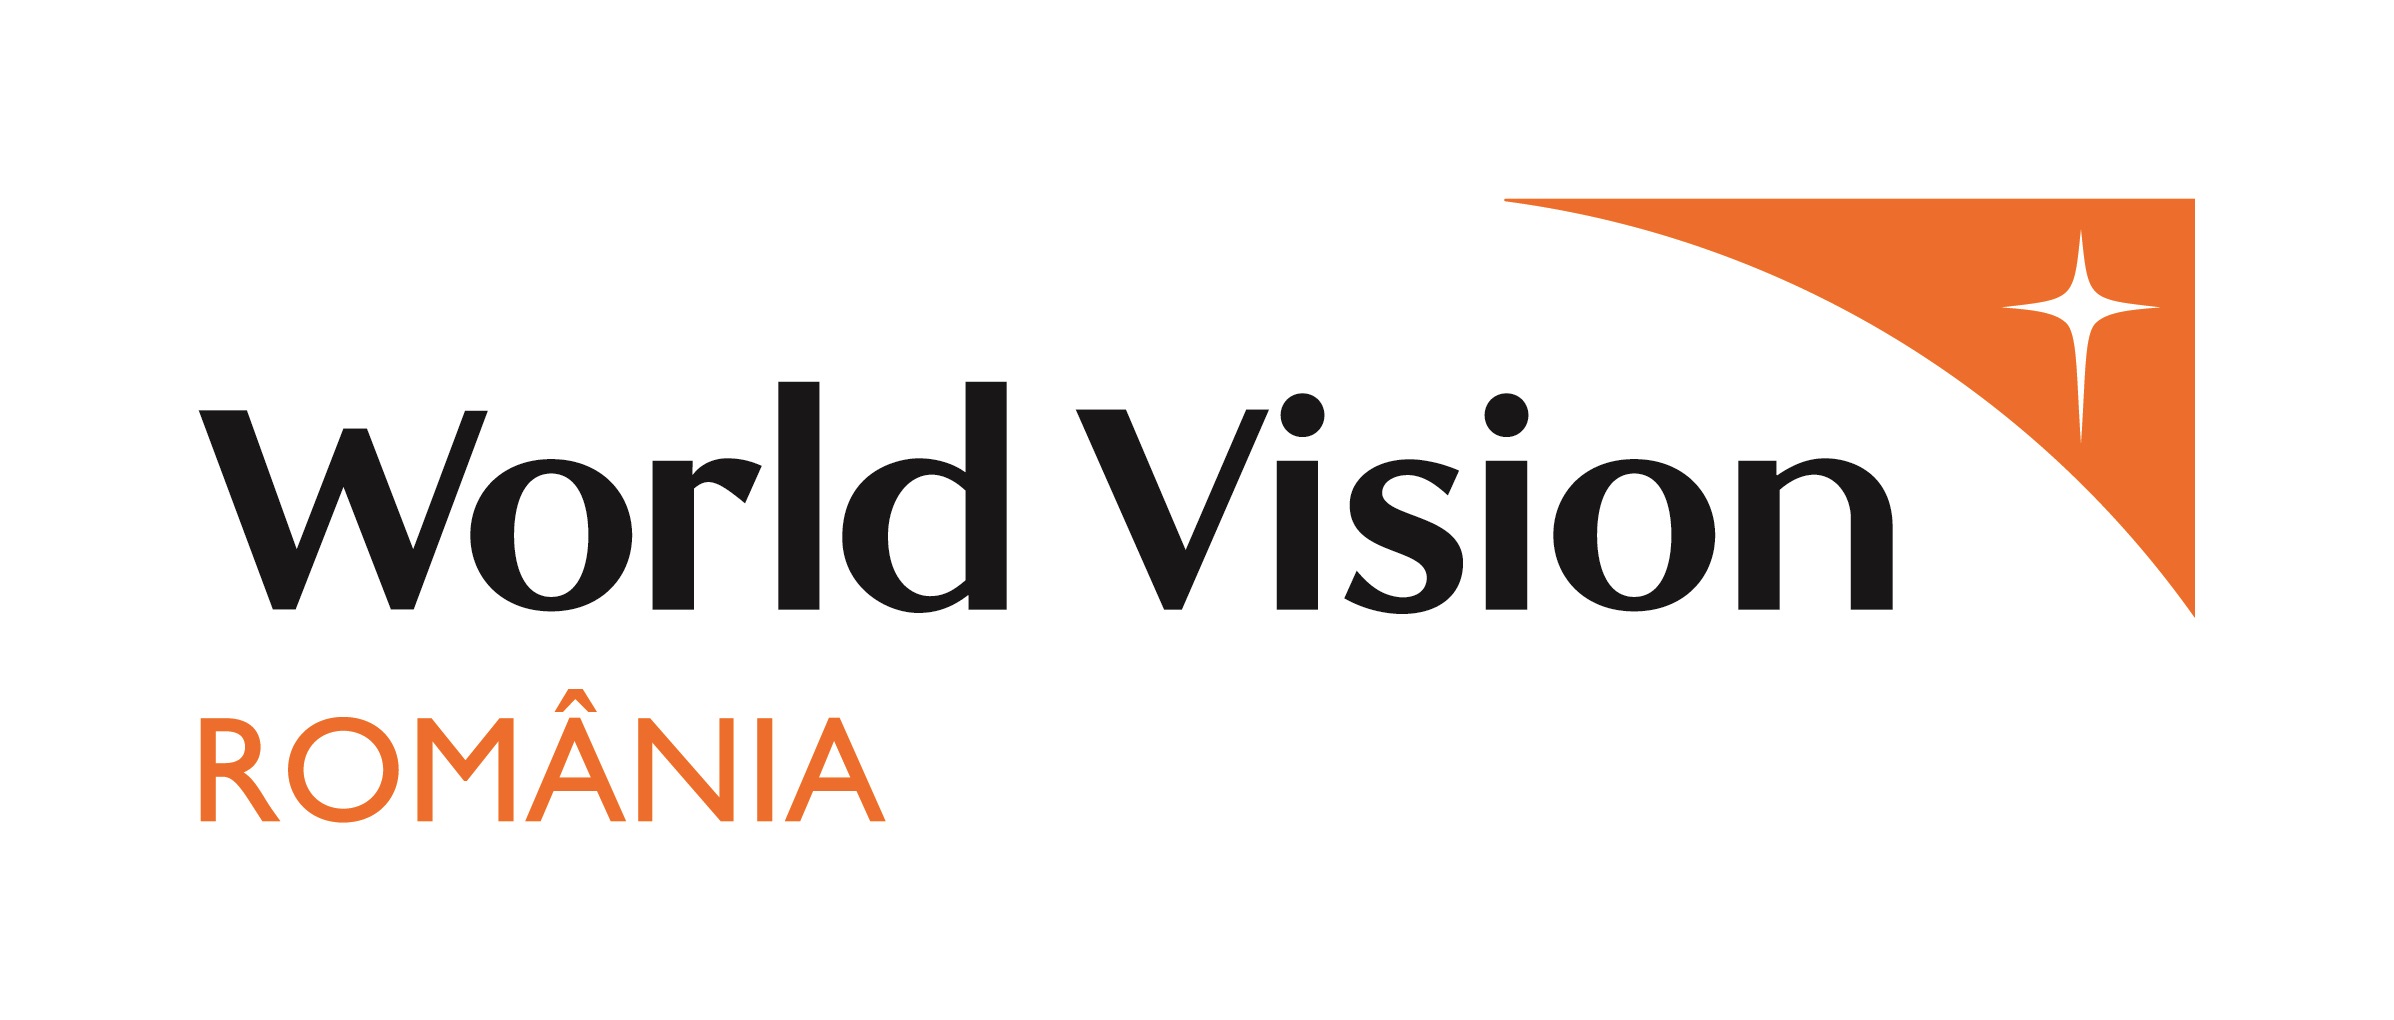 logo_world_vision